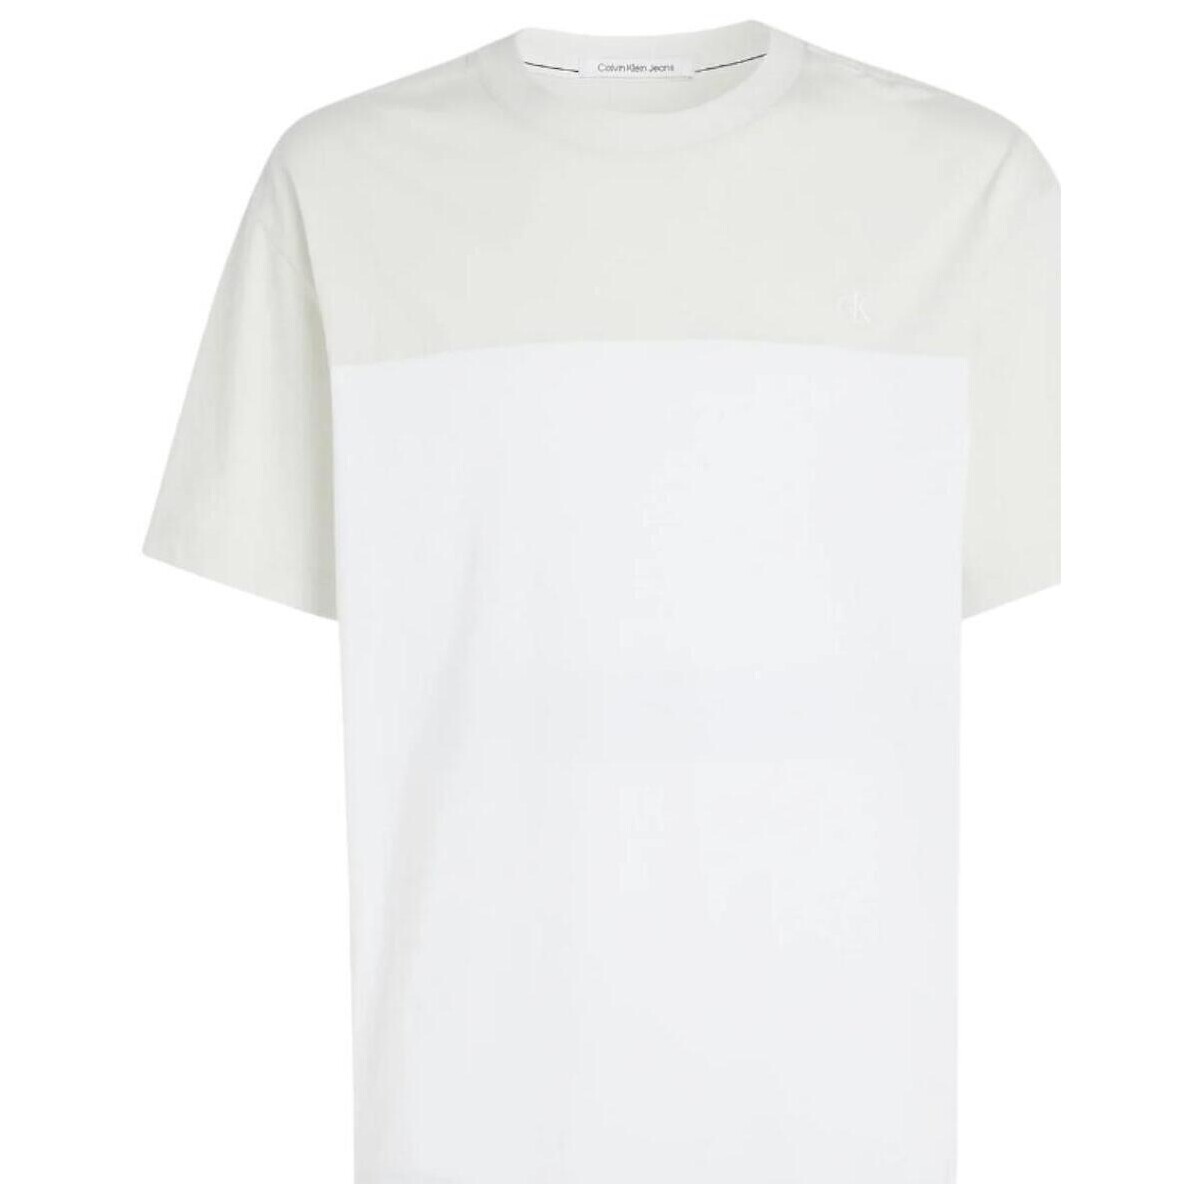 Textil Muži Trička s krátkým rukávem Calvin Klein Jeans  Bílá